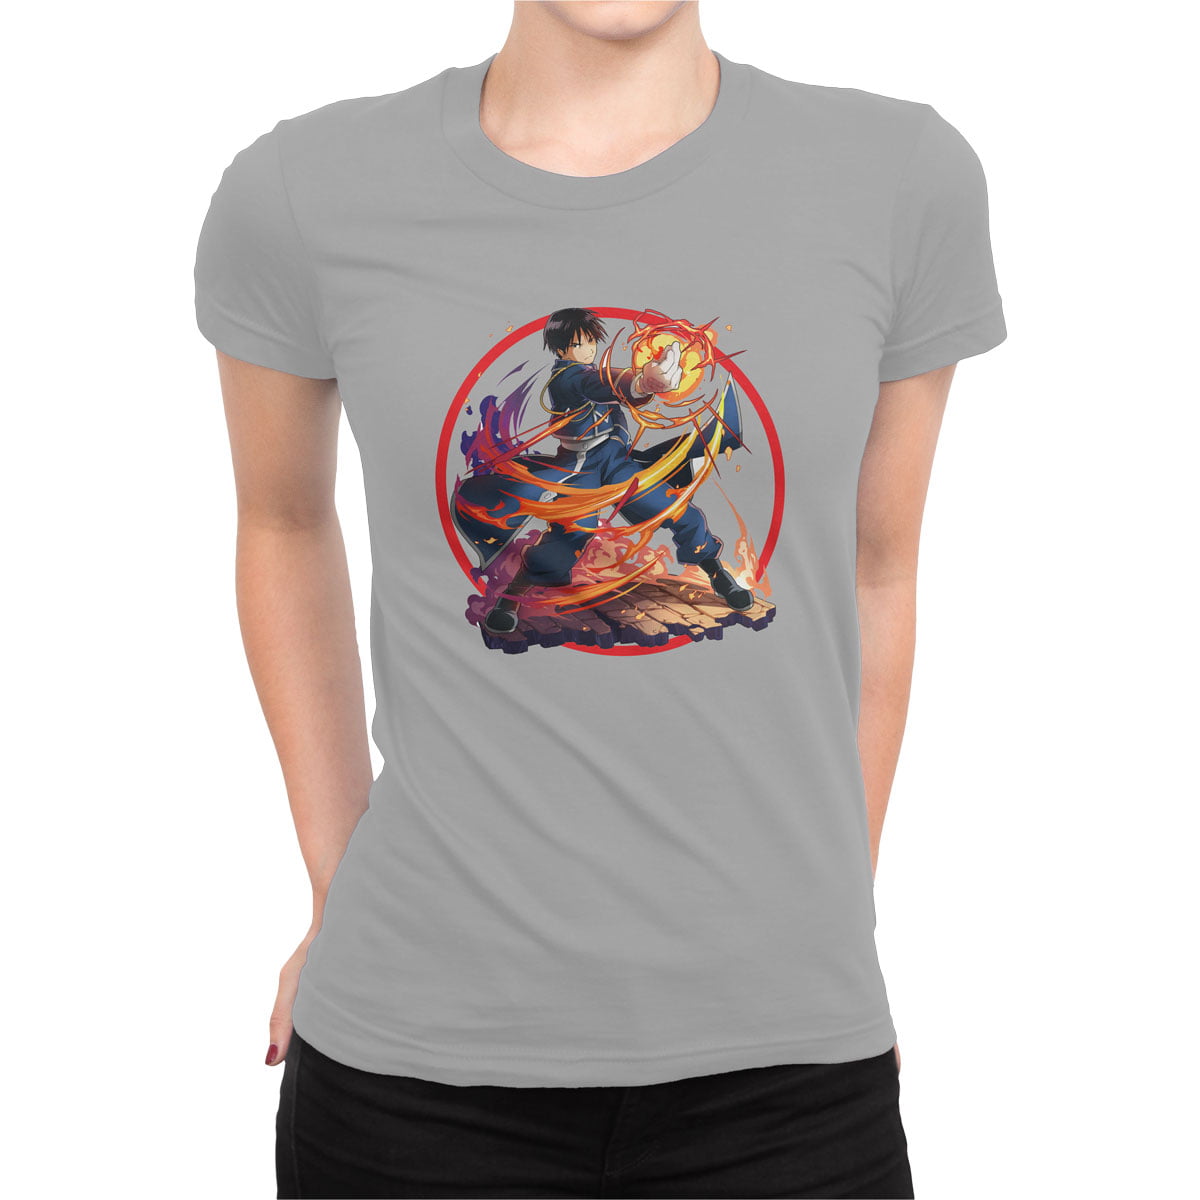 Fullmetal alchemist no6 tisort kadin g - fullmetal alchemist roy mustang kadın t-shirt - figurex